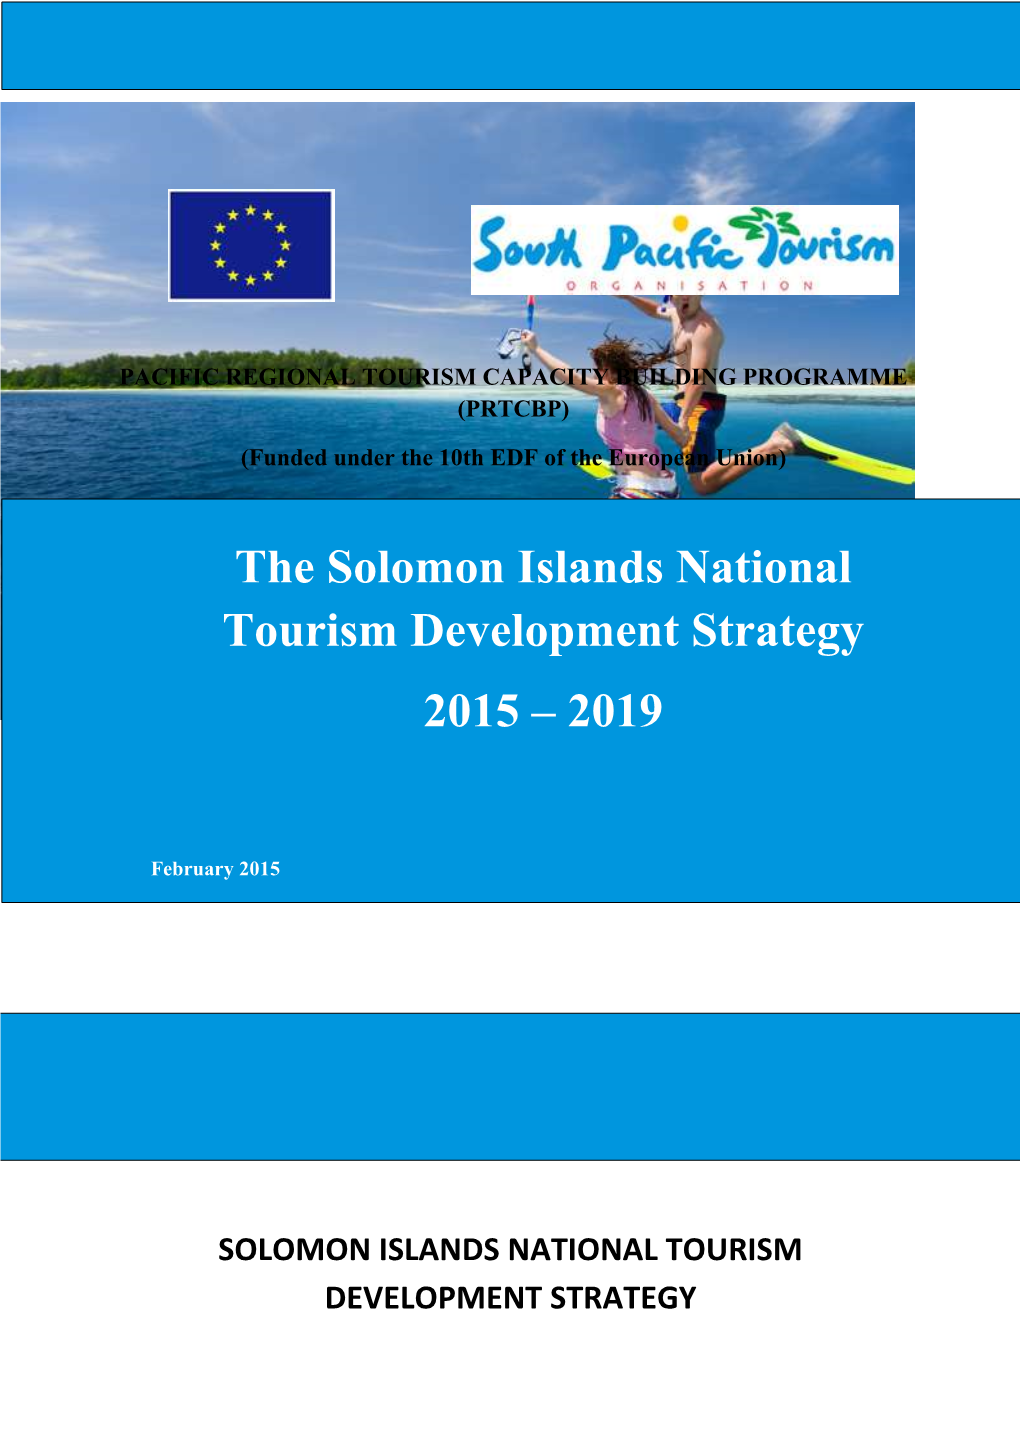 The Solomon Islands National Tourism Development Strategy 2015